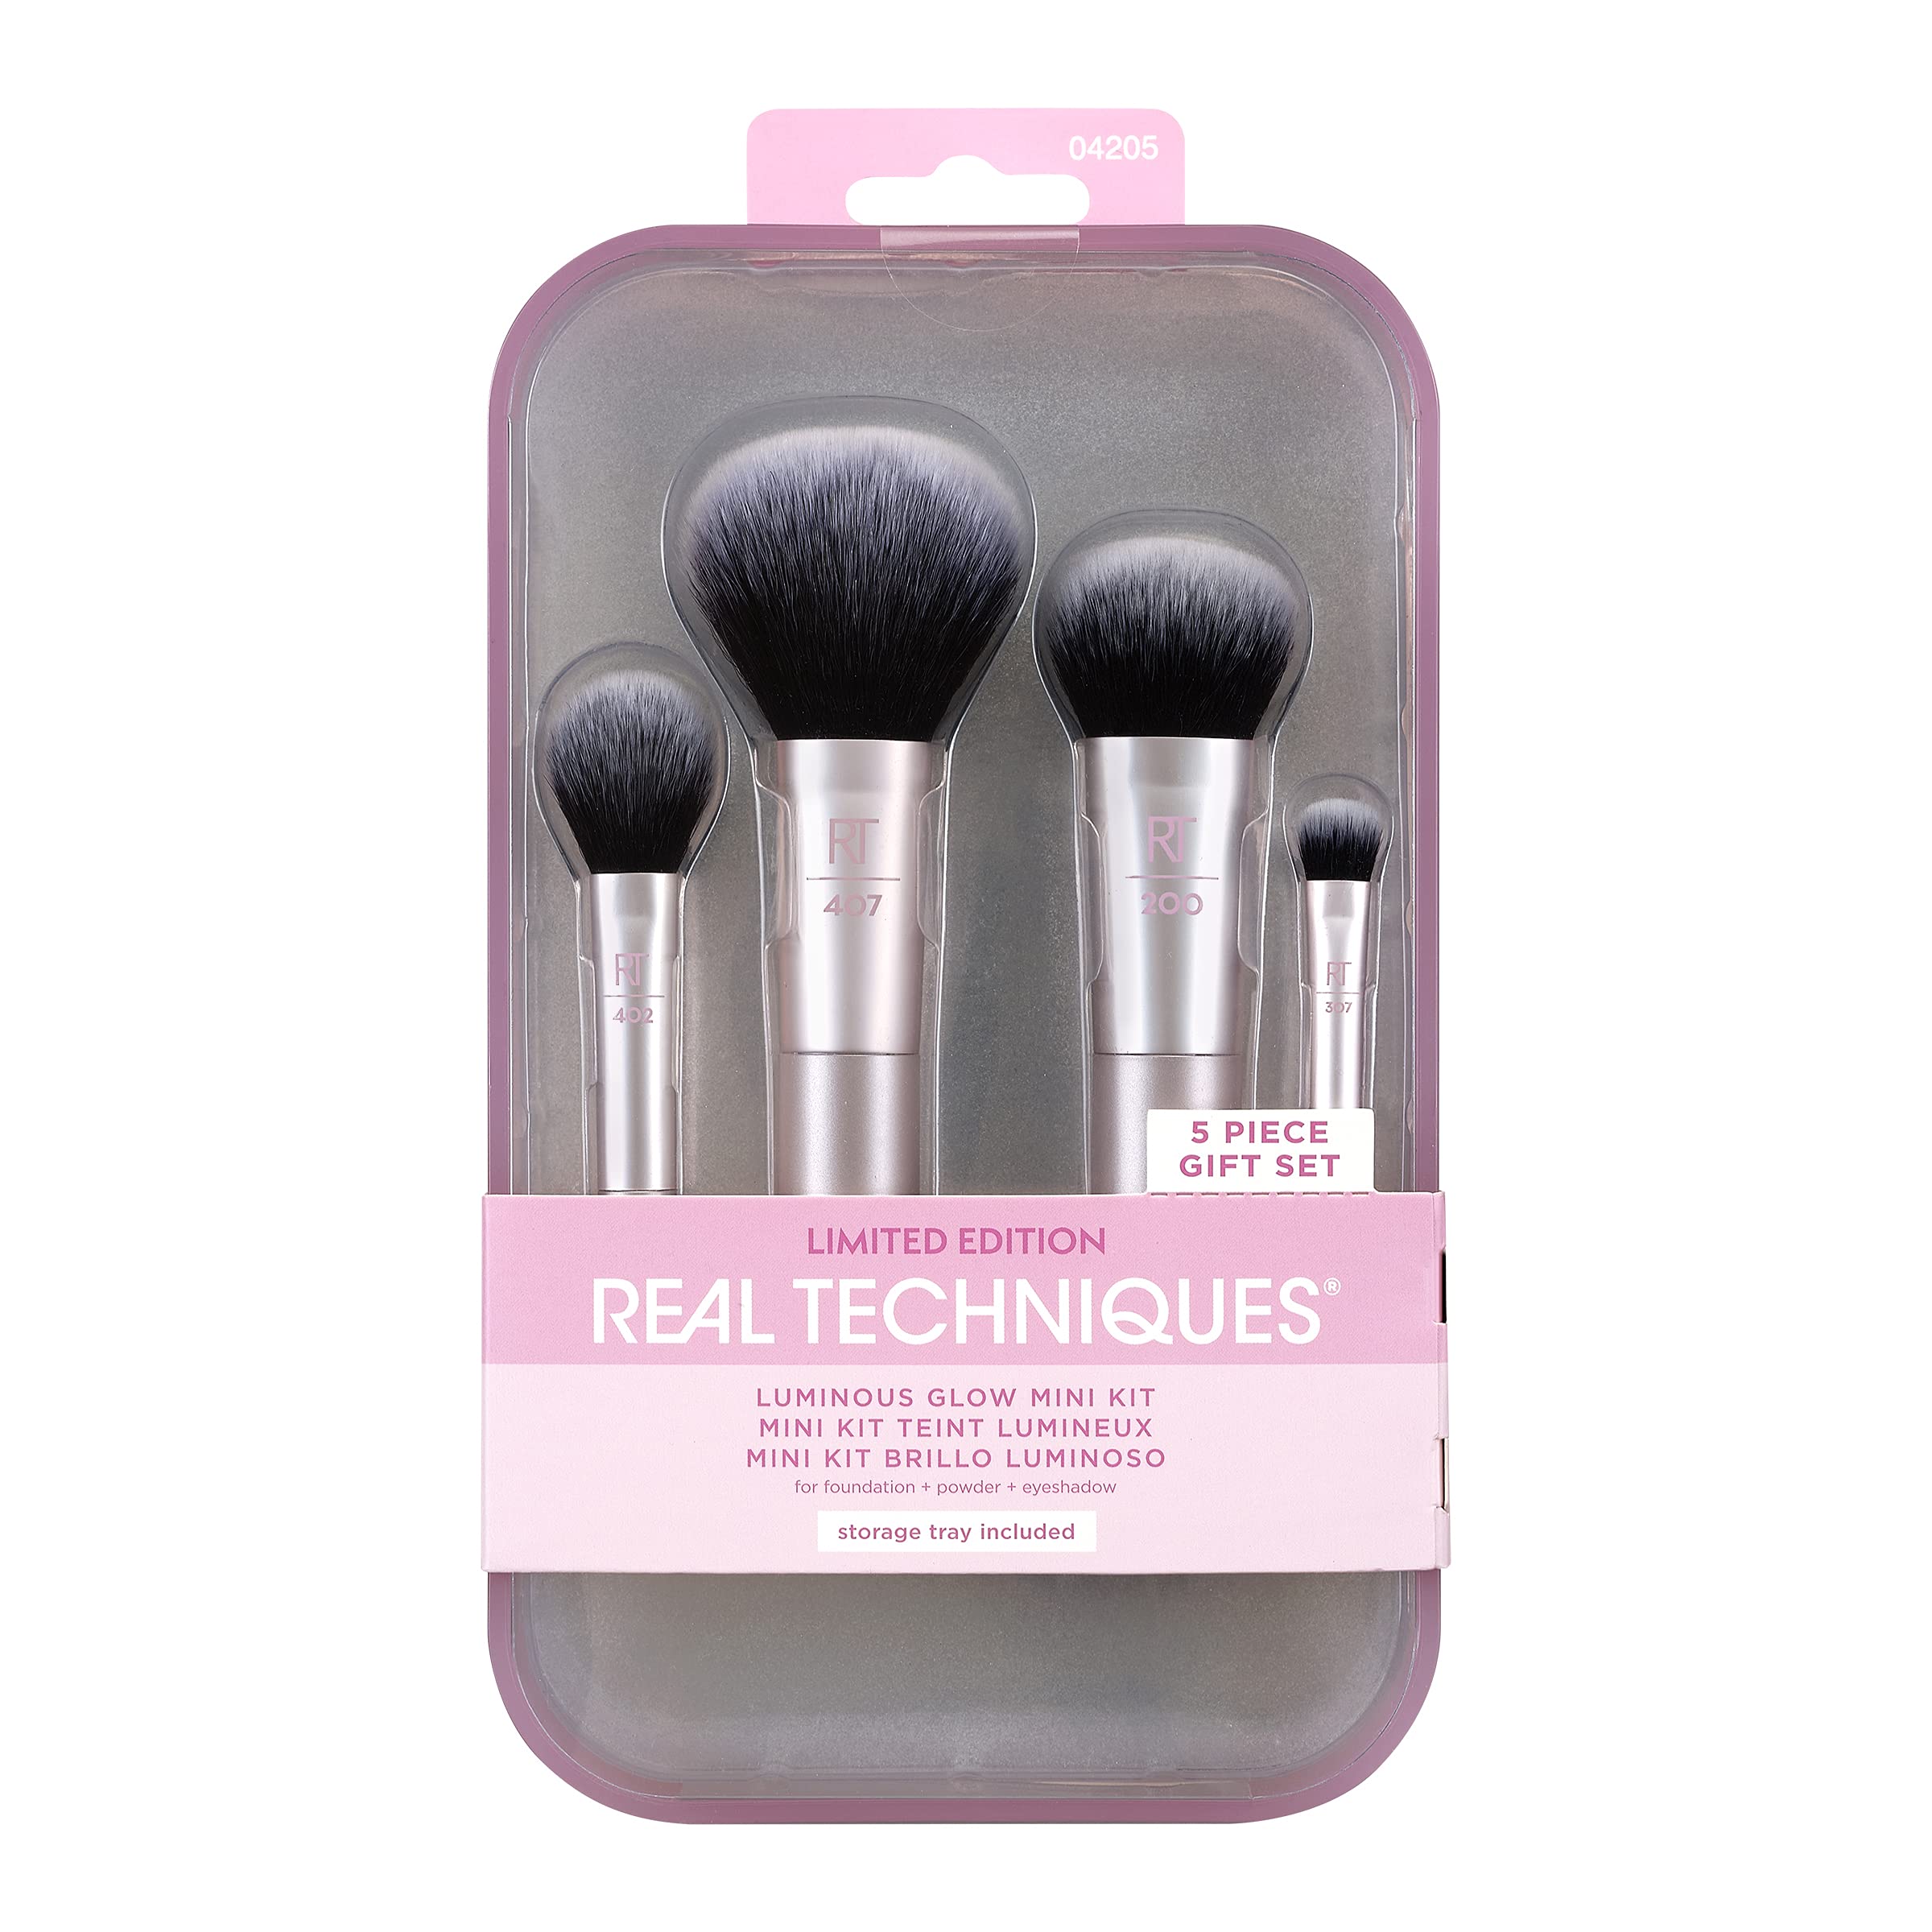 Real Techniques Limited Edition Luminous Glow Mini Holiday Kit, Stocking Stuffer, Premium Makeup Brushes, Soft Bristles, 5 Piece Gift Set